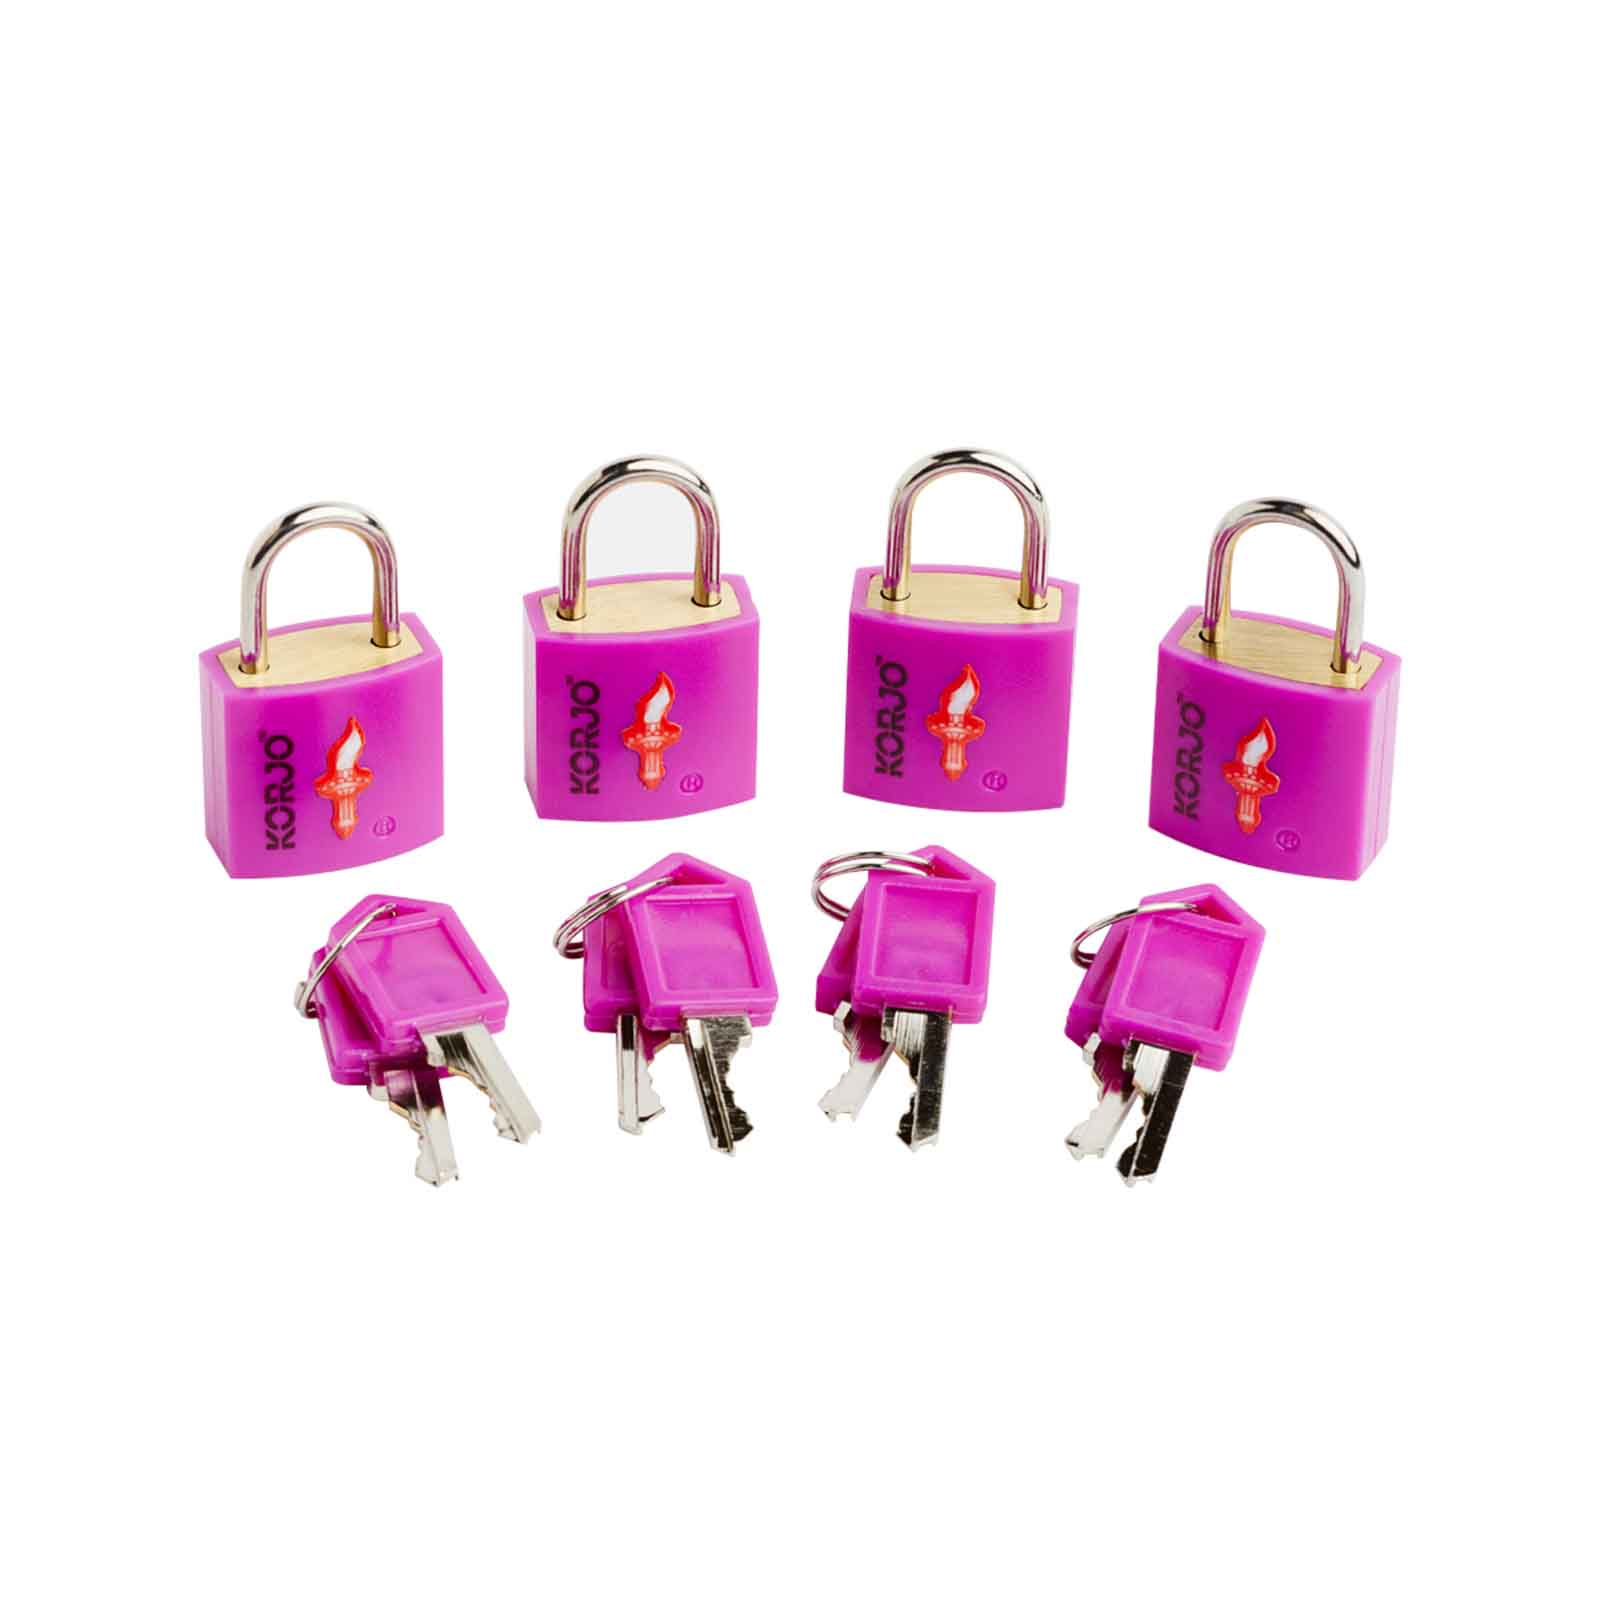 Korjo-Tsa-Keyed-Locks-Four-Pack-Purple-Angle